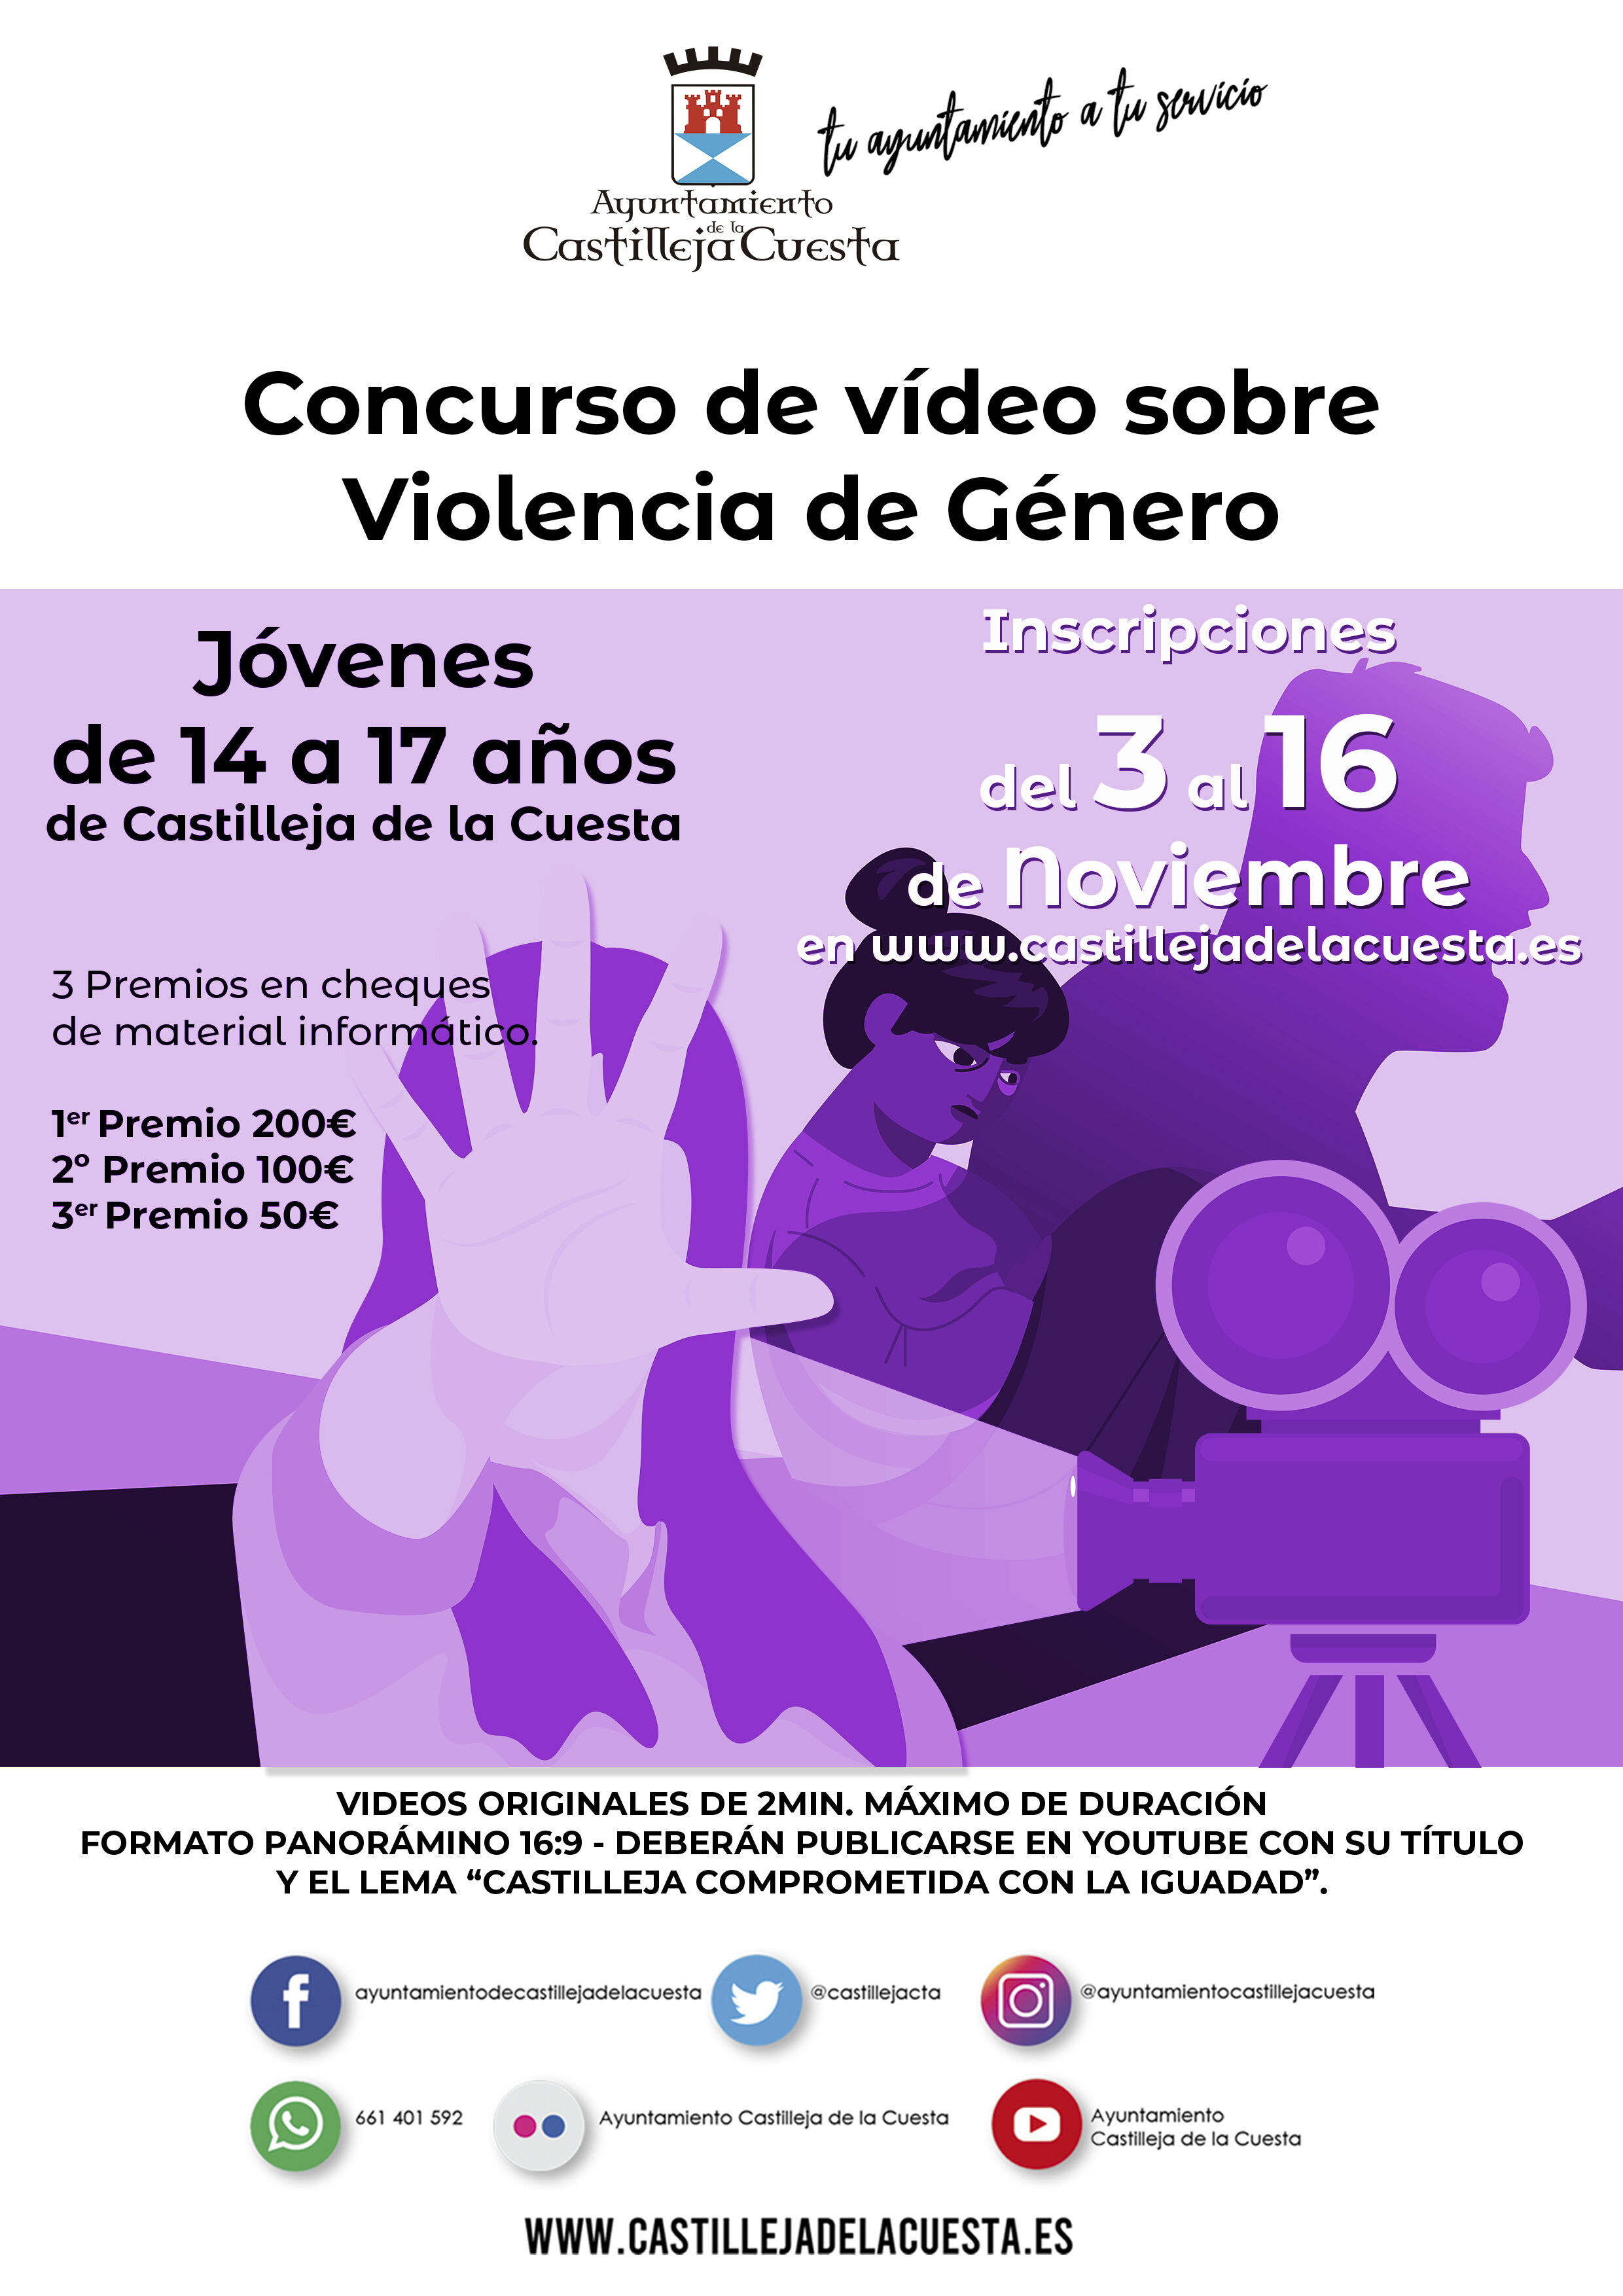 Concurso video Violencia machista 25N 2020